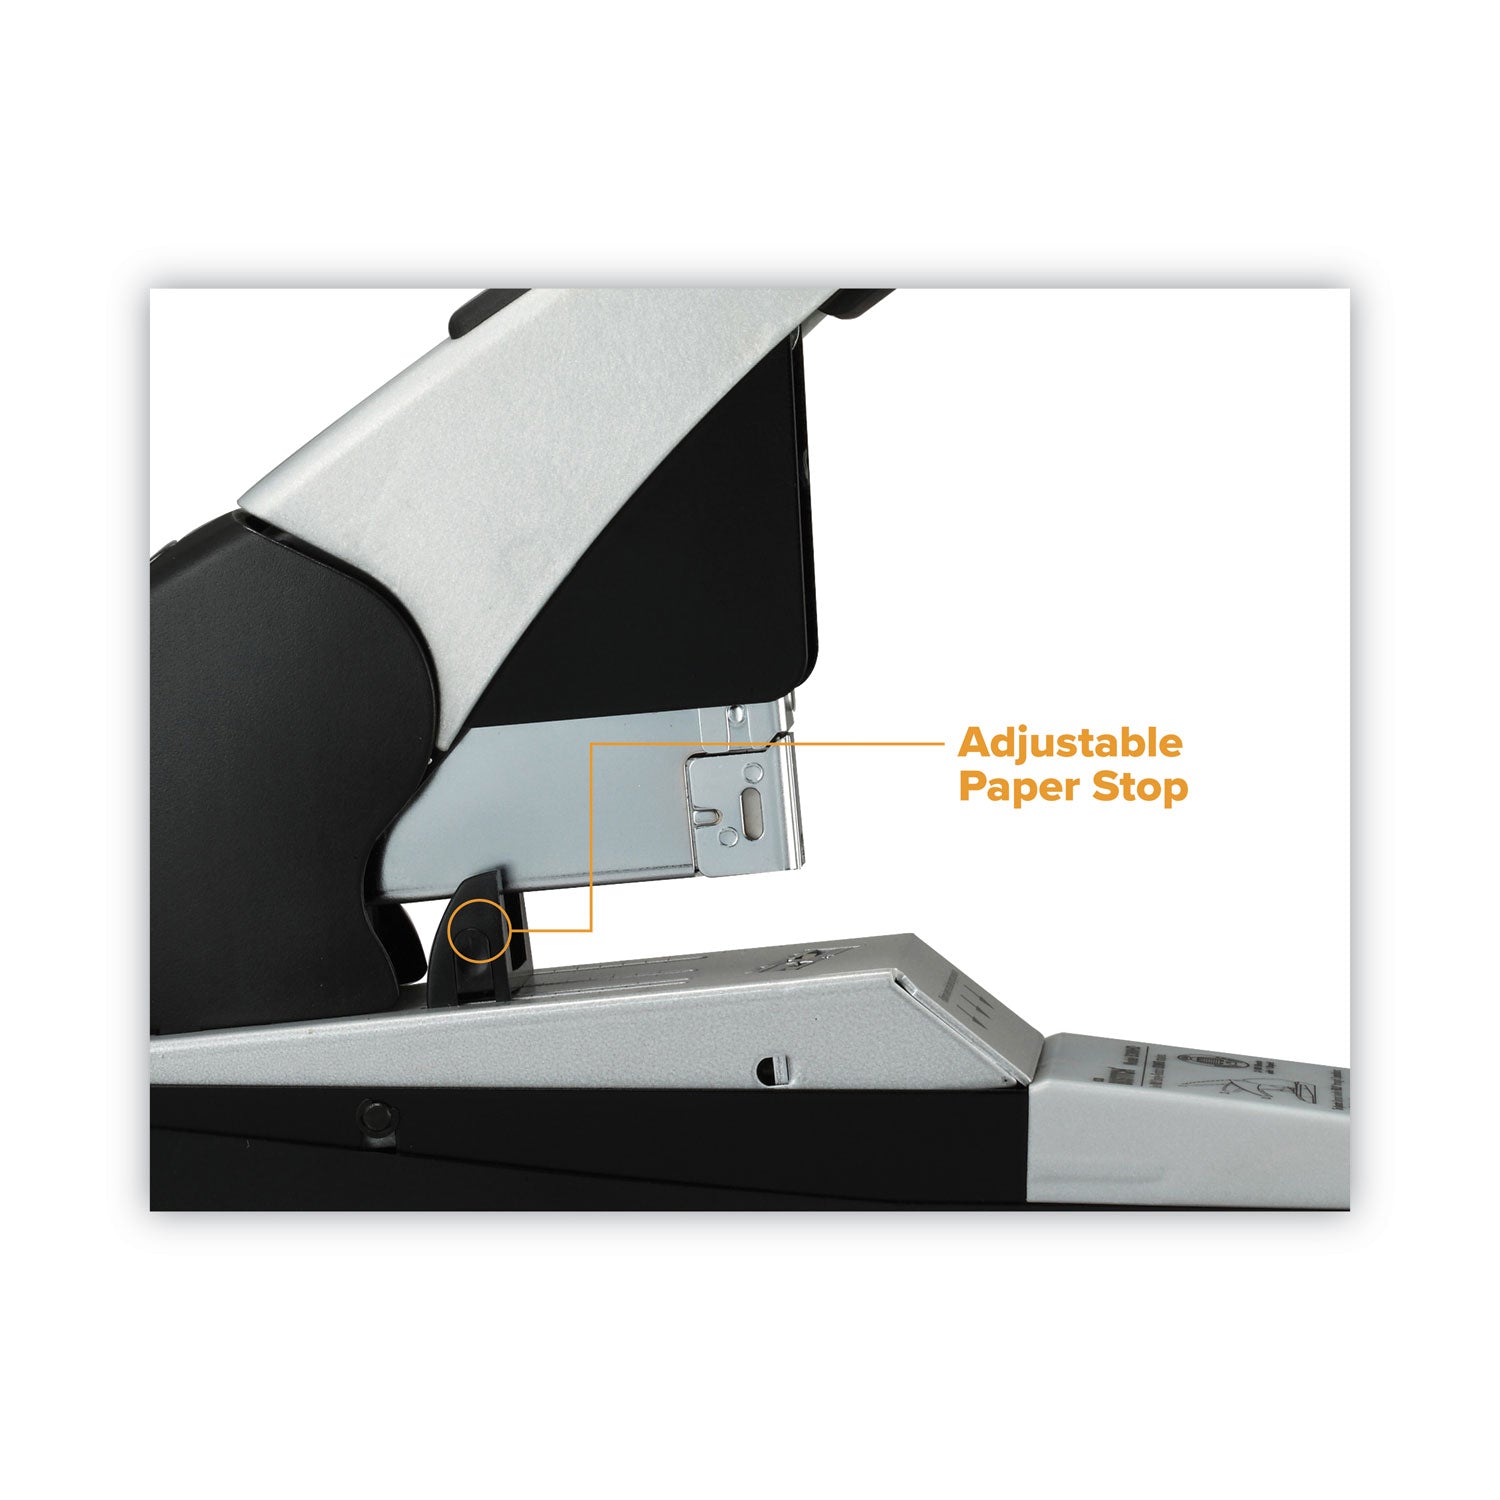 Auto 180 Xtreme Duty Automatic Stapler, 180-Sheet Capacity, Silver/Black - 